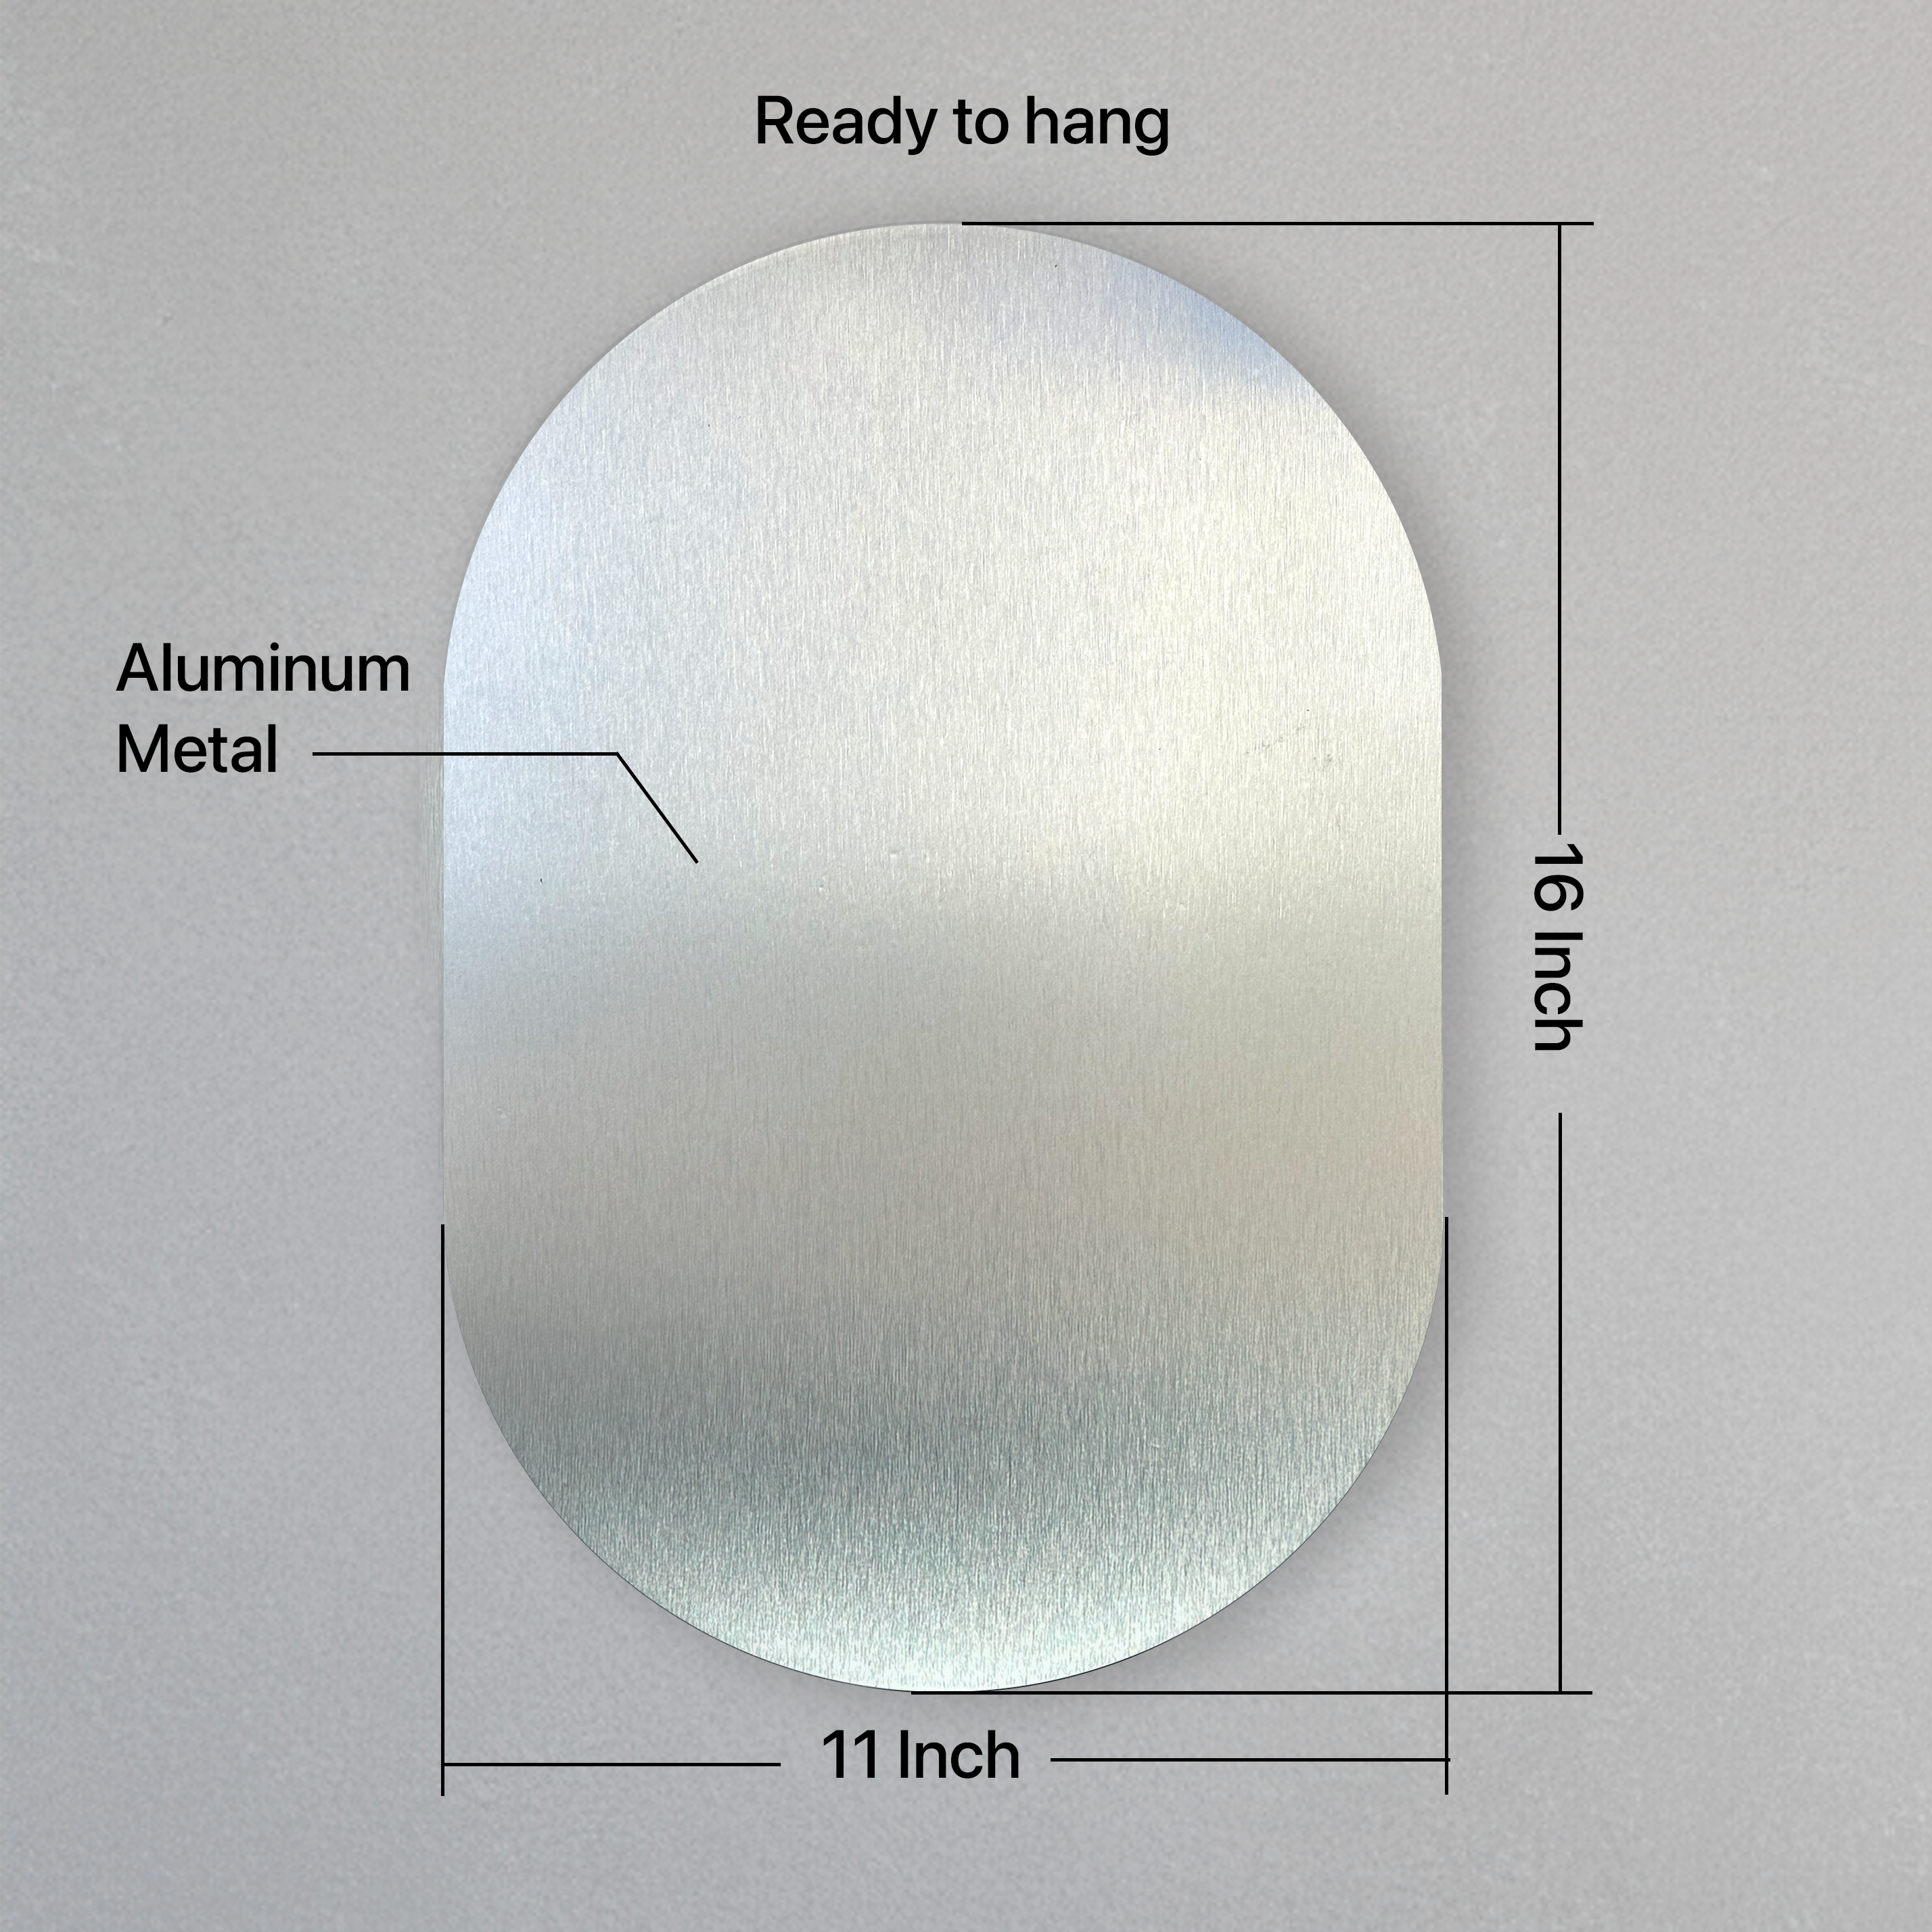 Aluminum wall art specifications